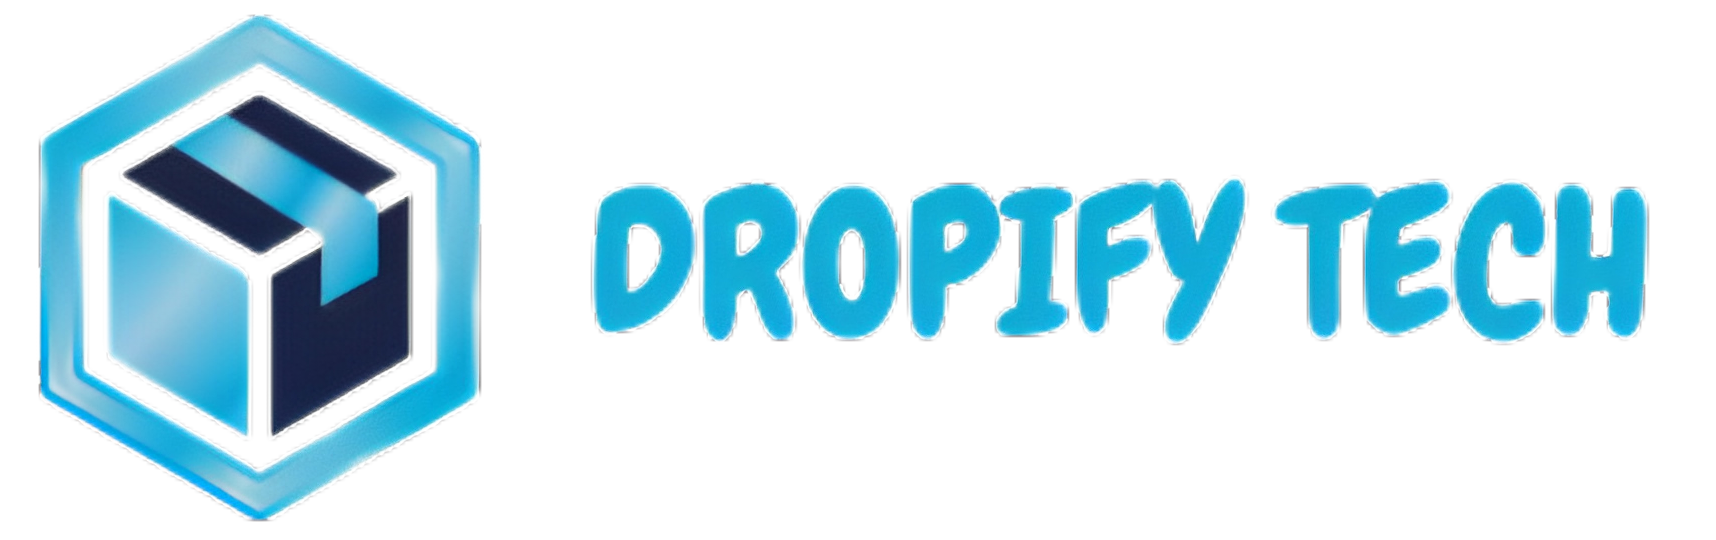 dropifytech